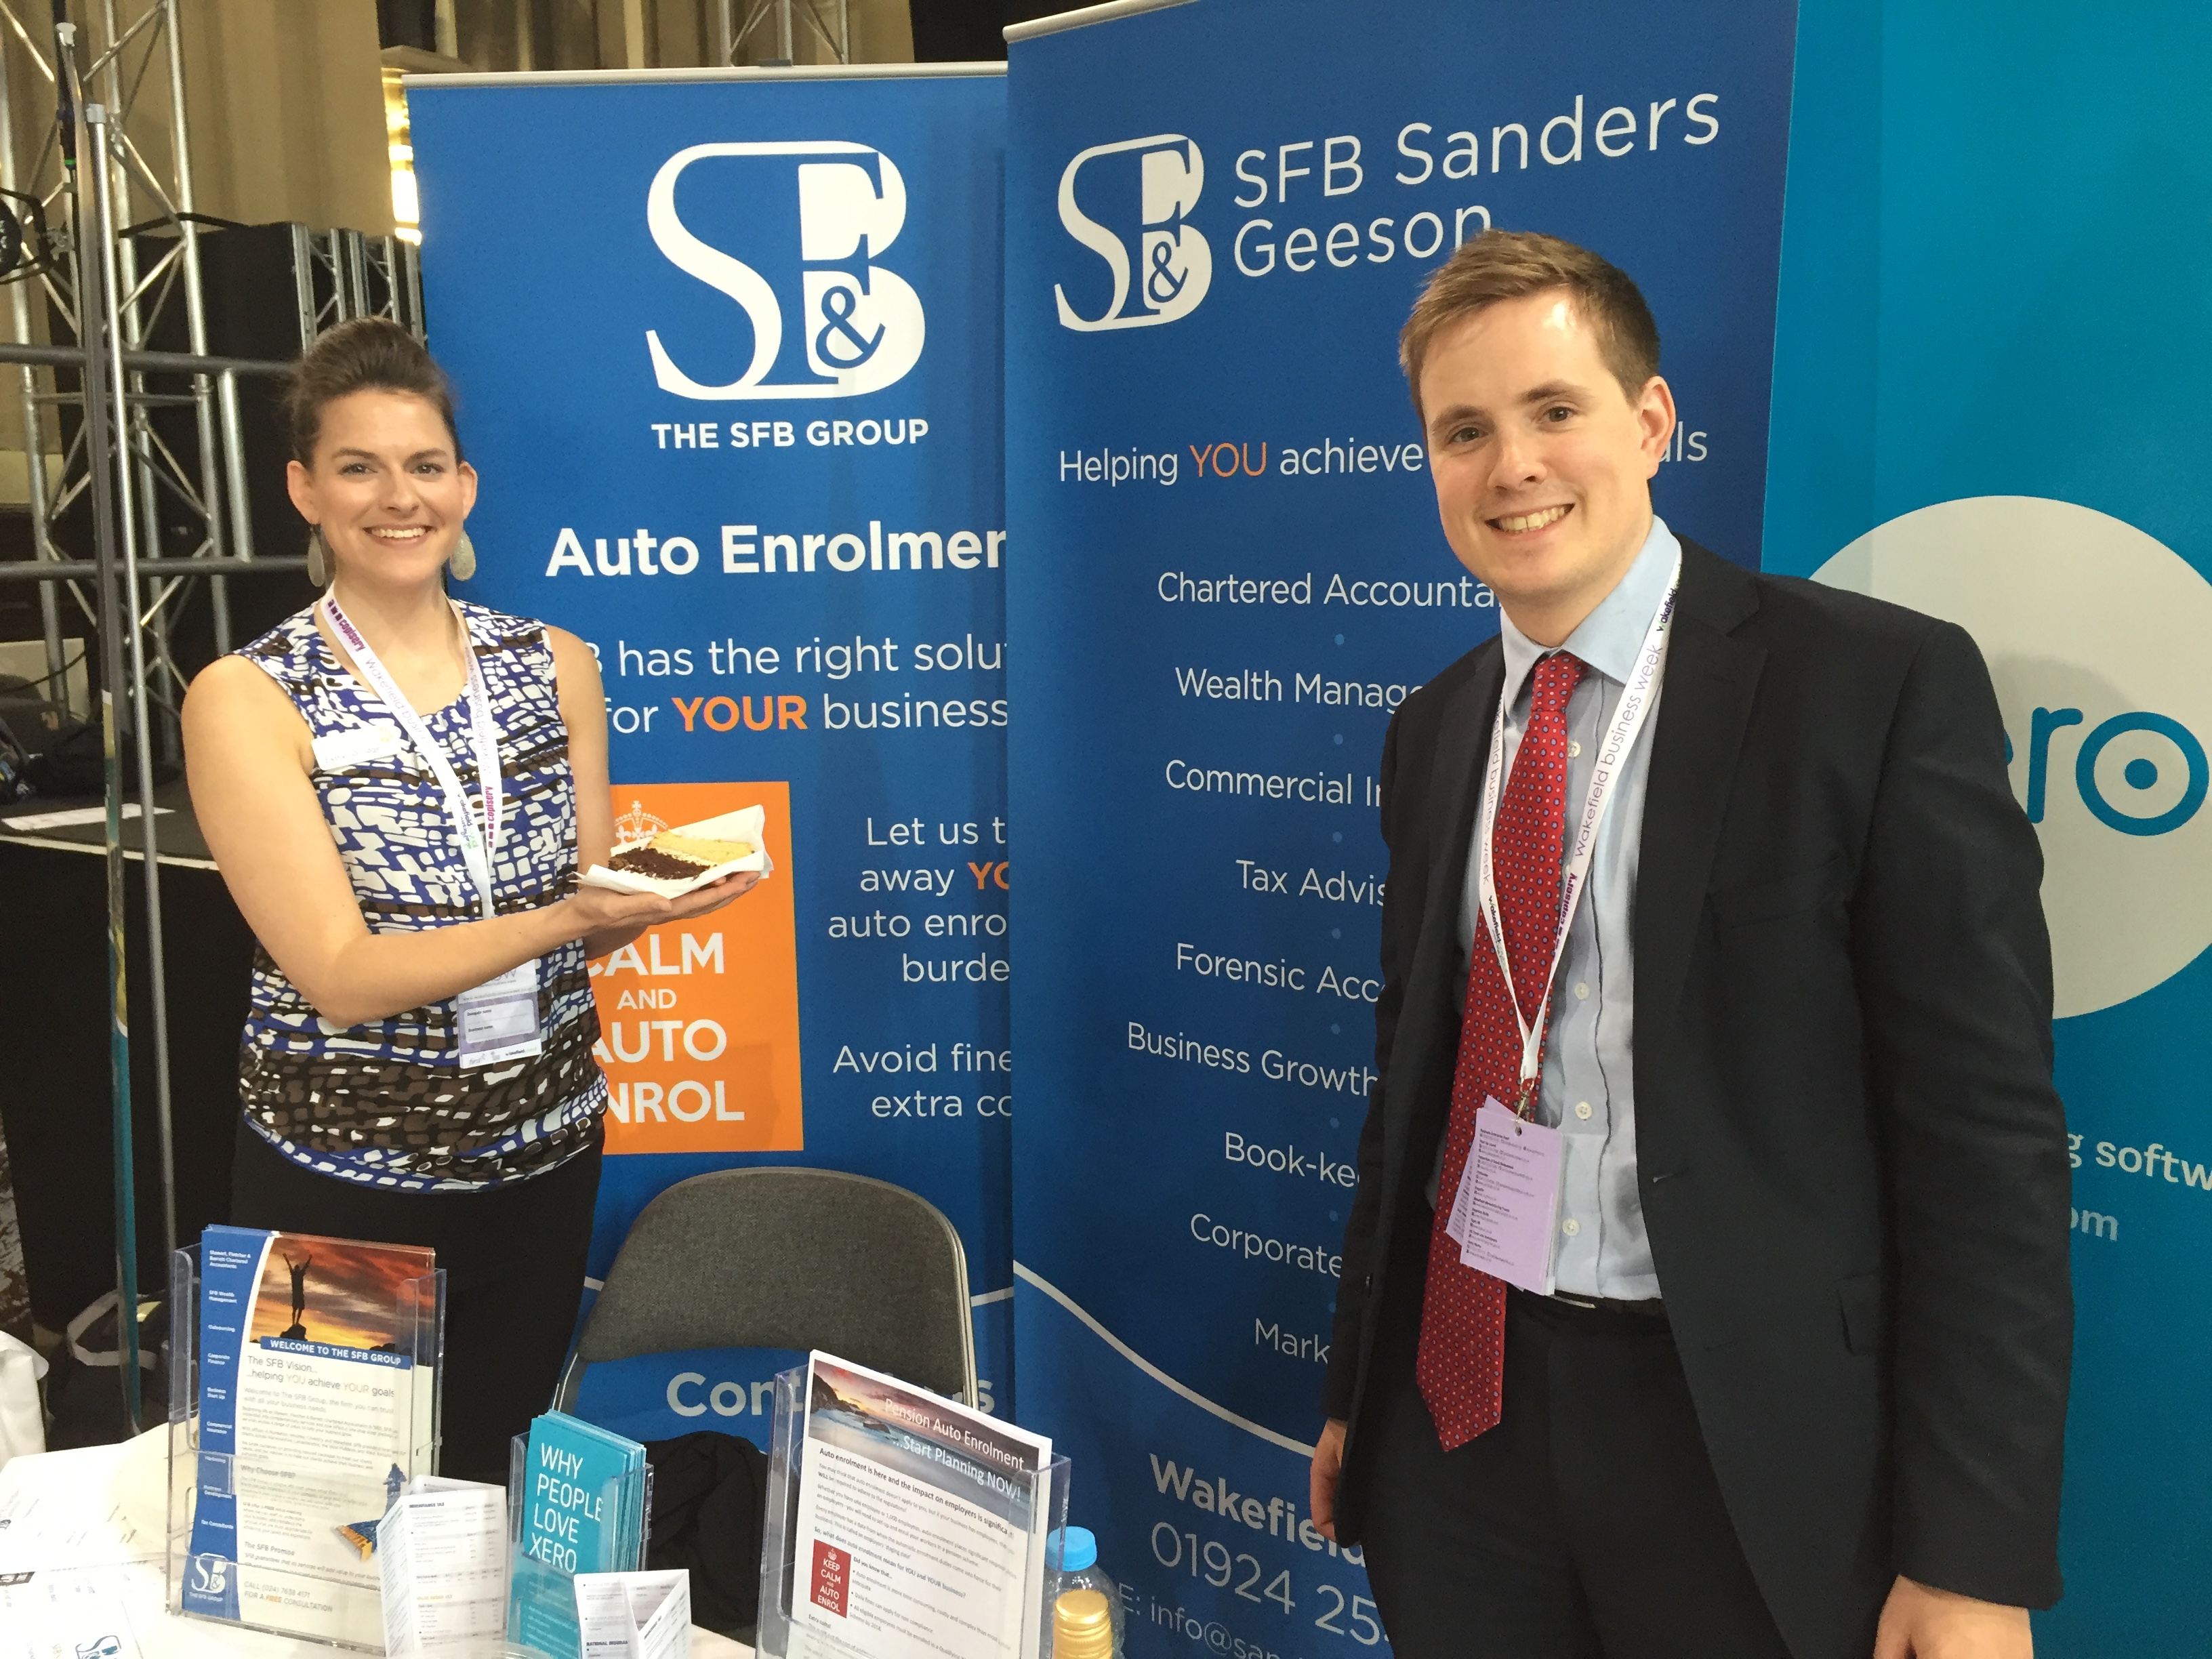 Social Progress Ltd - Wakefield Business Conference 2016 - SFB Sanders Geeson